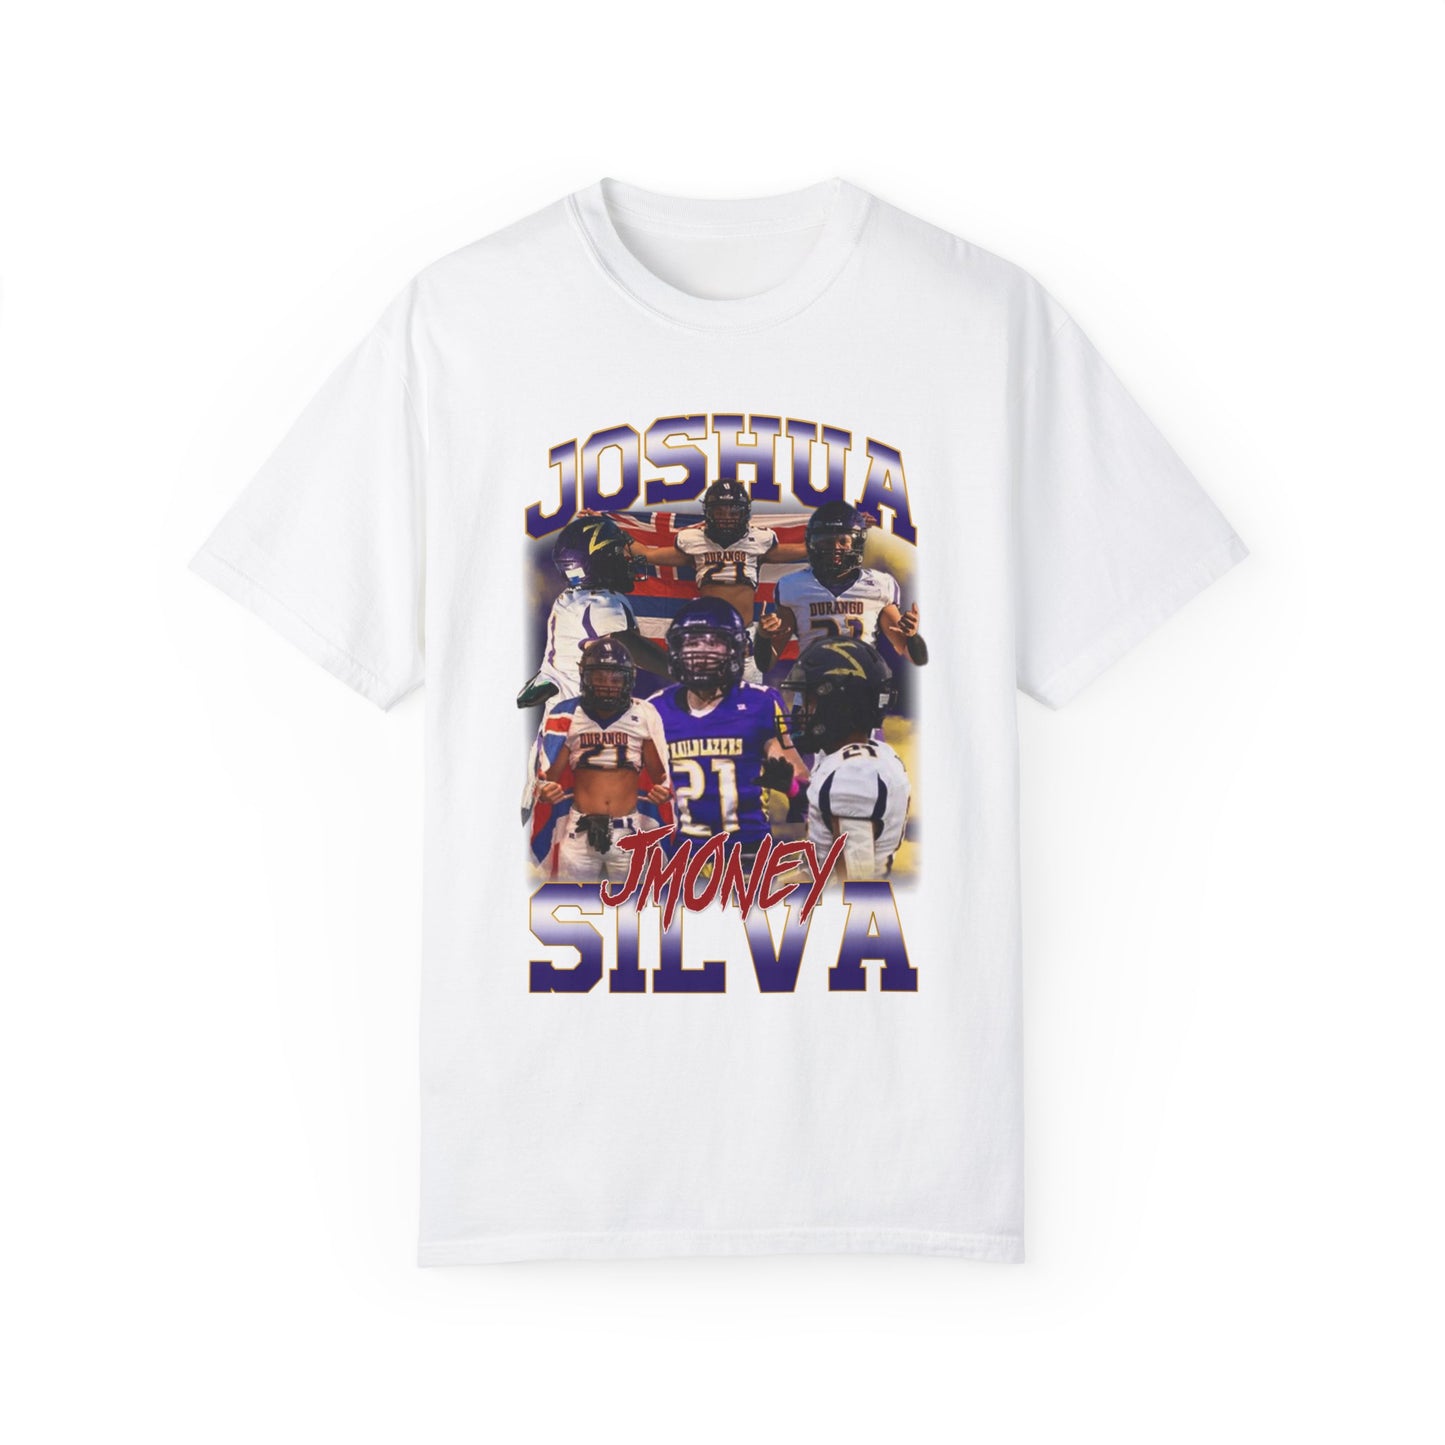 Joshua Silva Graphic T-shirt